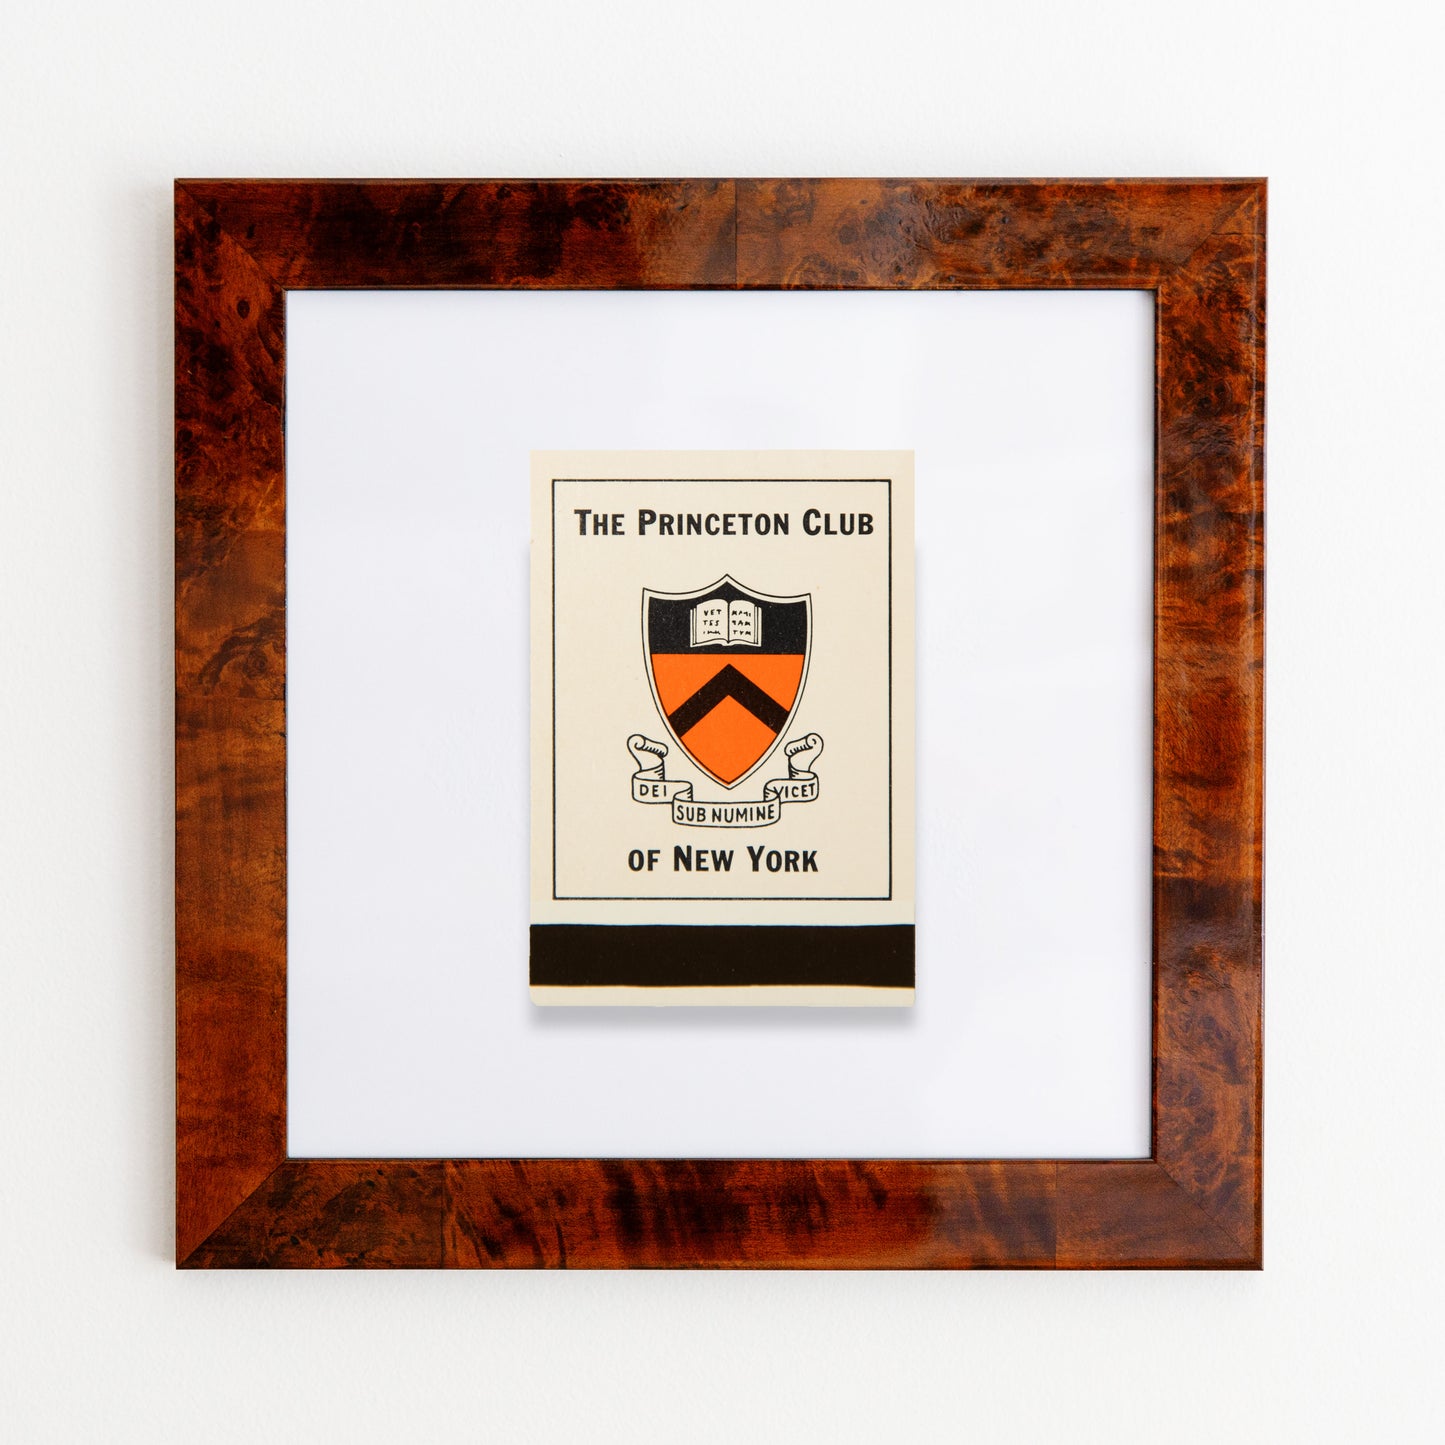 The Princeton Club